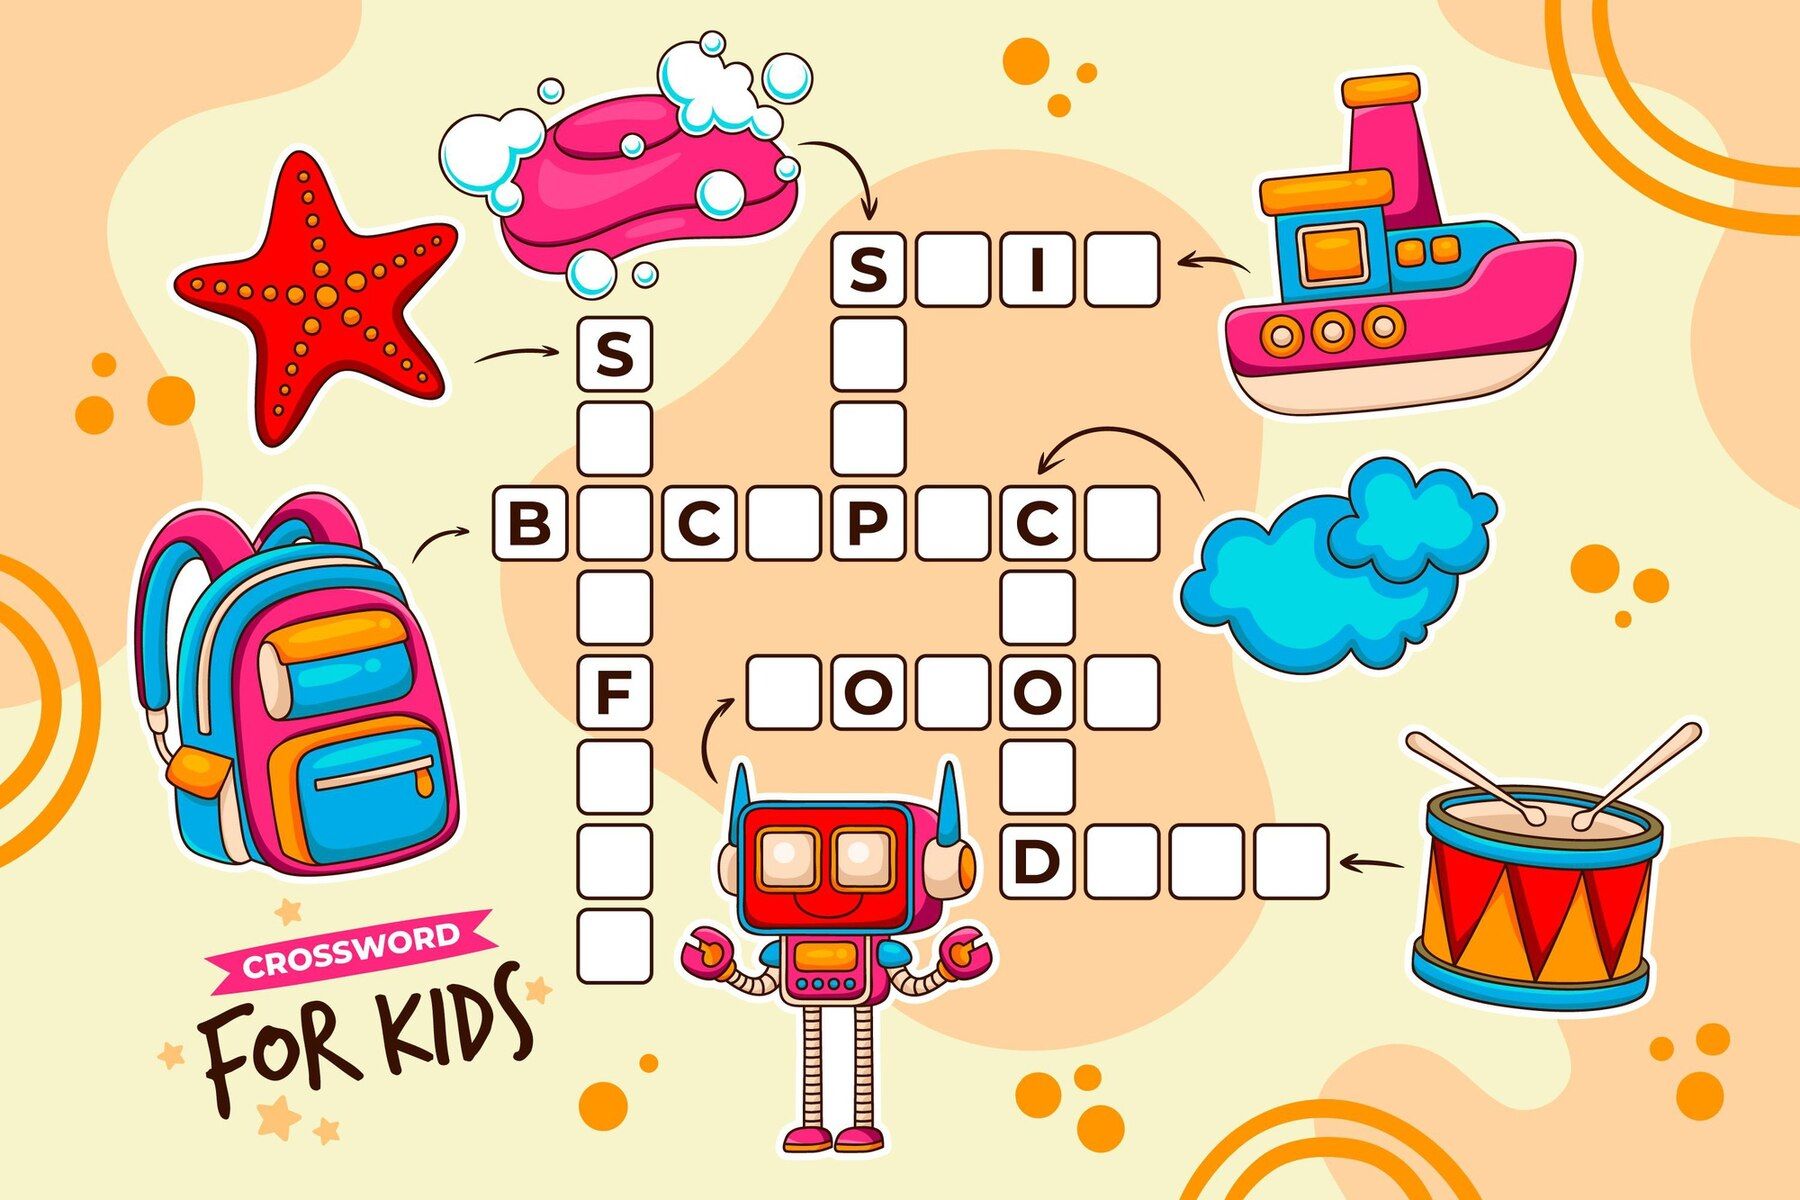 crossword-english-kids_23-2148783274.jpg